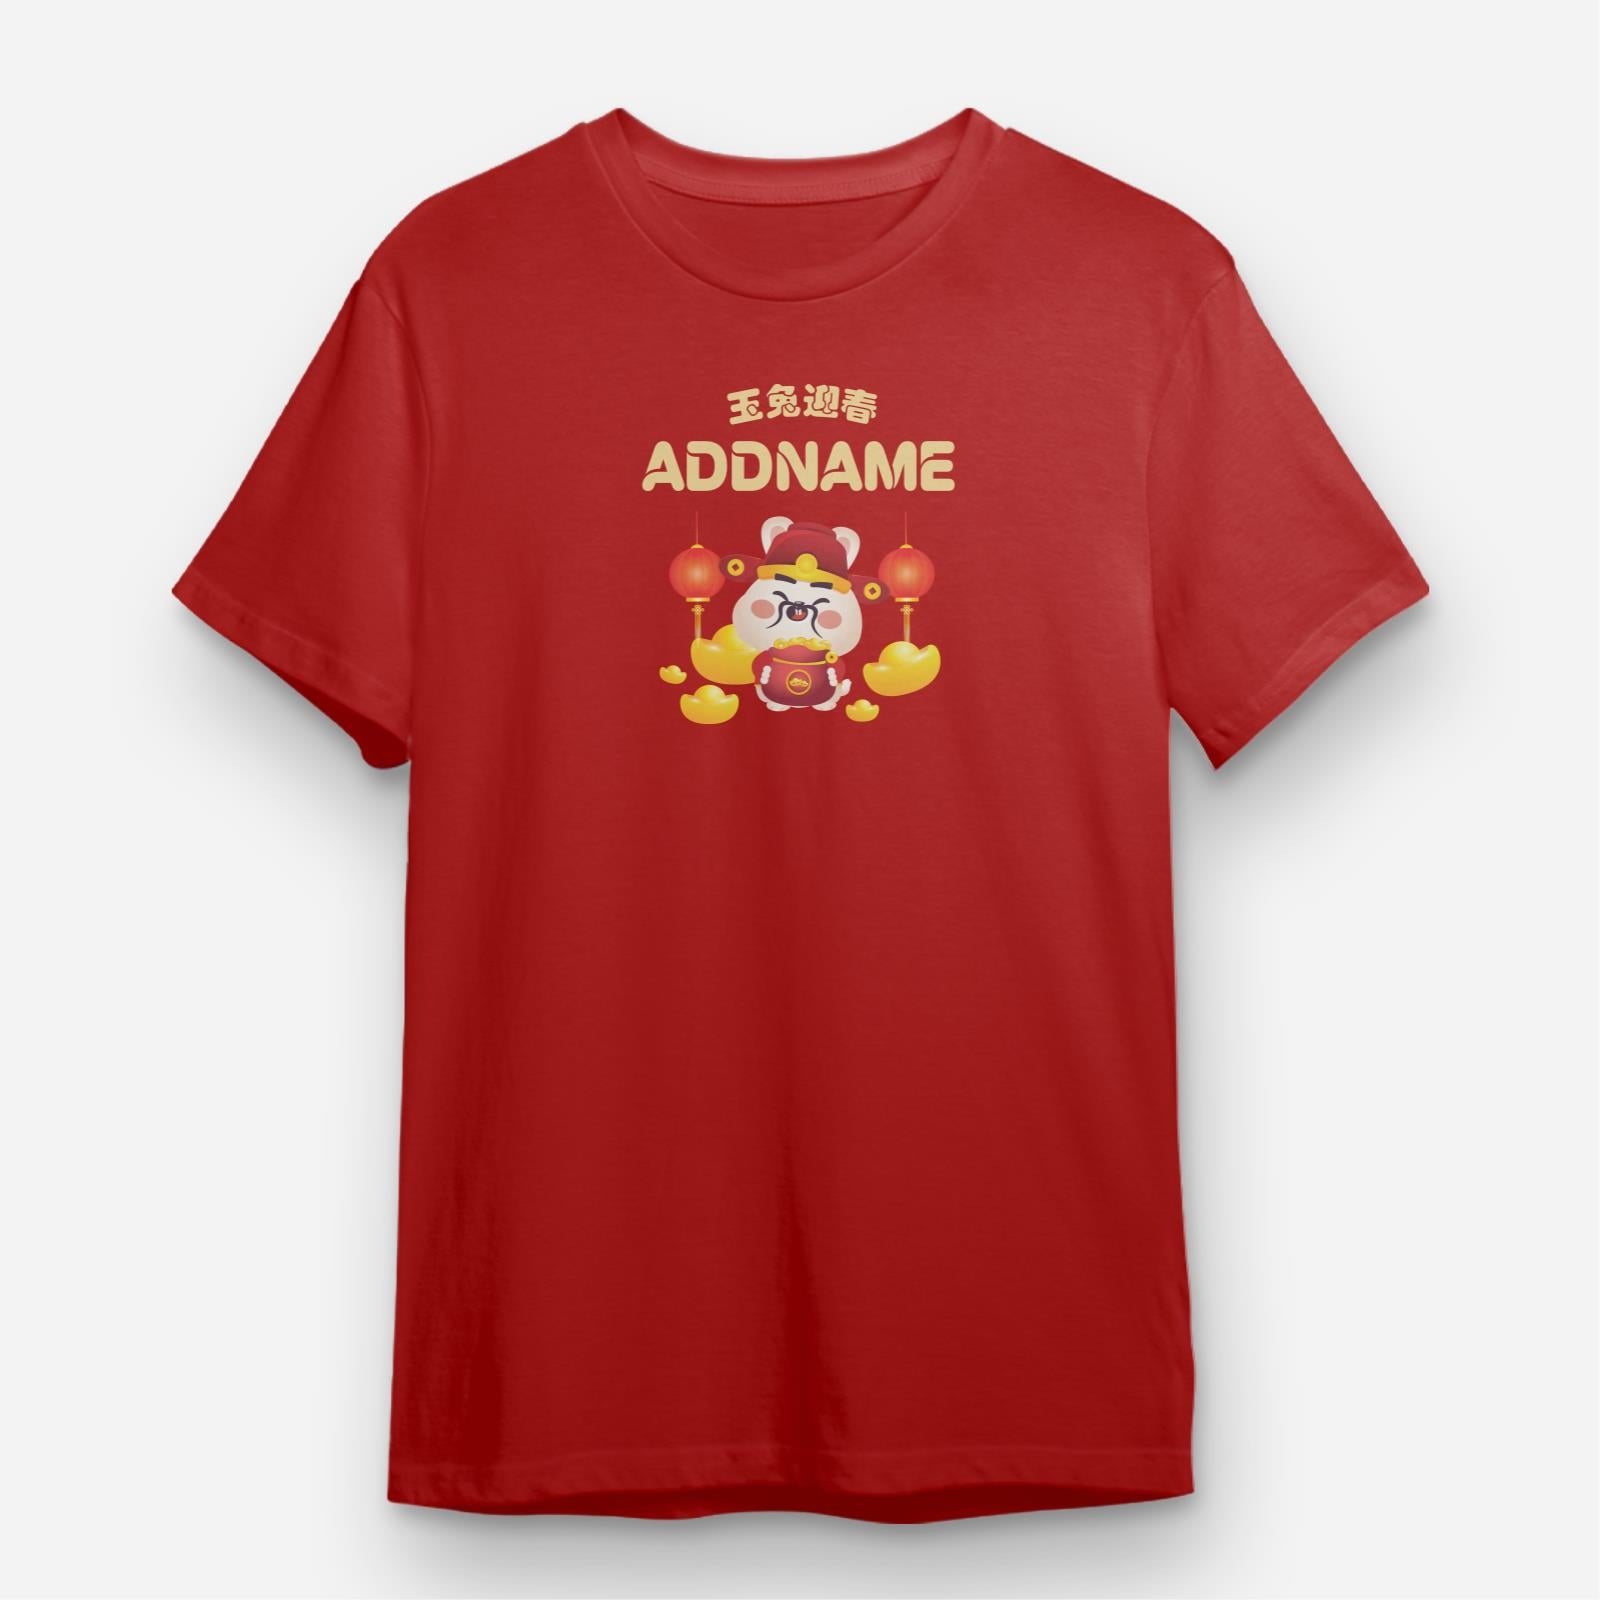 Cny Rabbit Family - Daddy Rabbit Unisex Tee Shirt with English Personalization